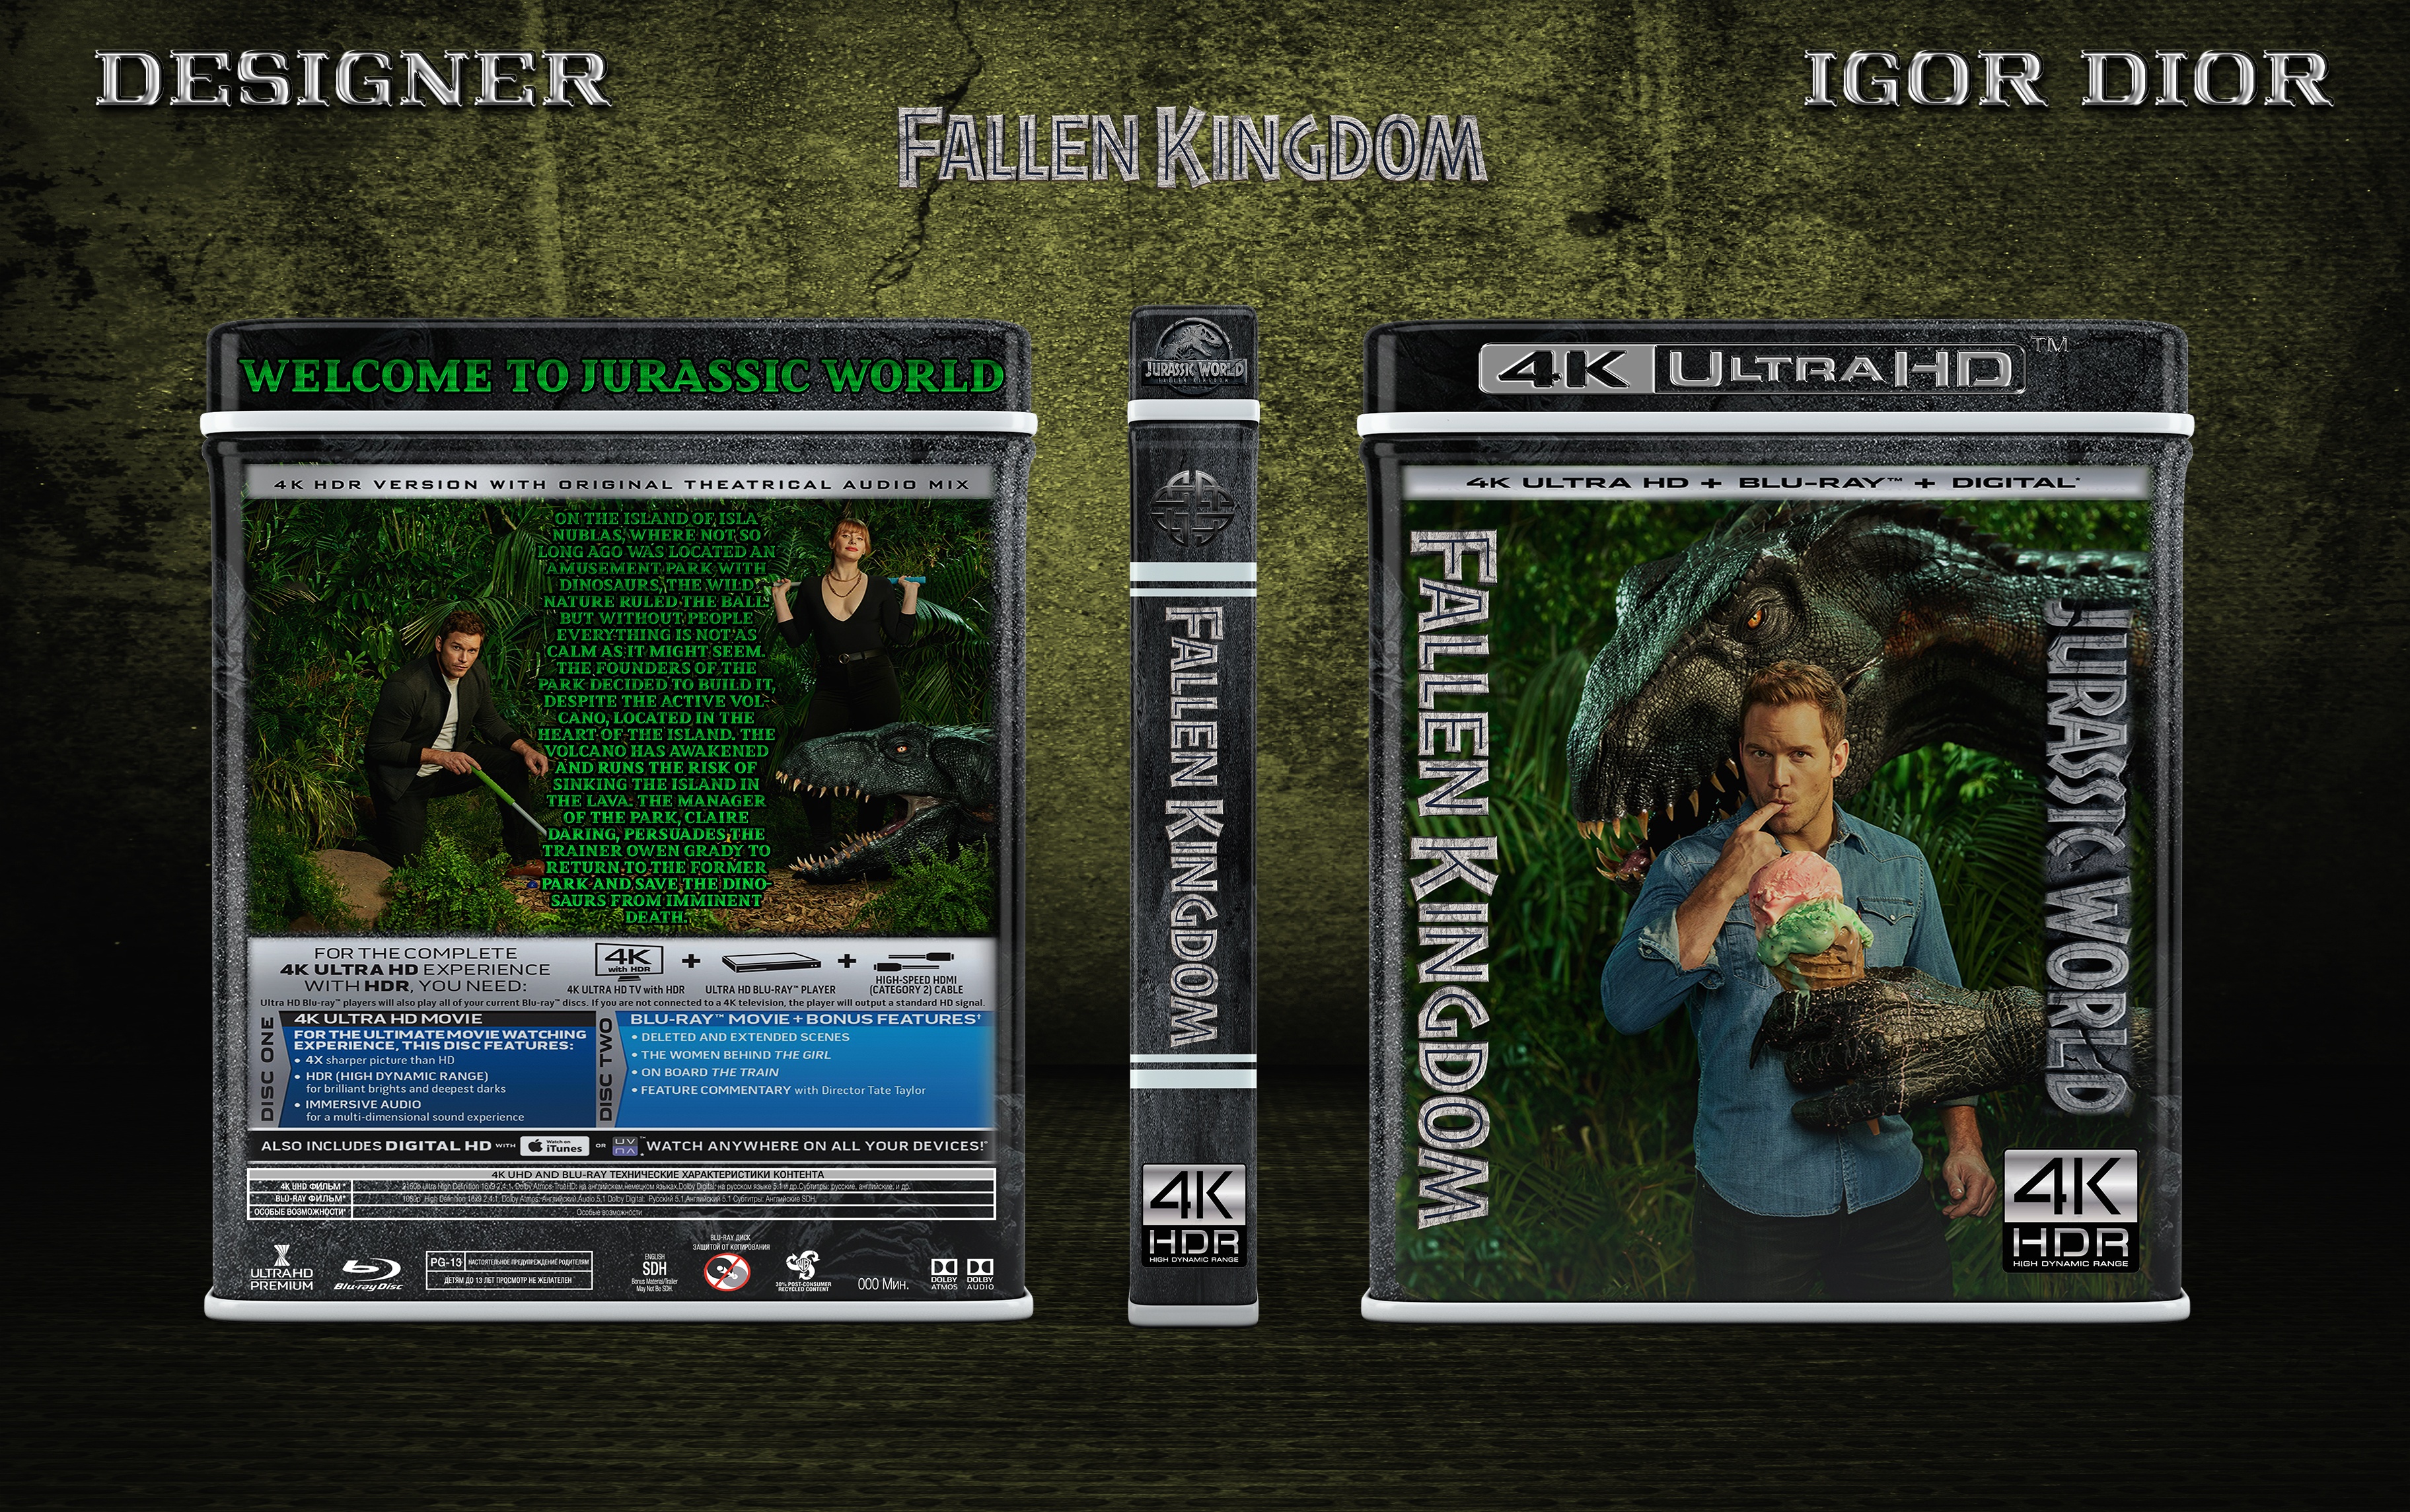 instal the last version for iphoneJurassic World: Fallen Kingdom